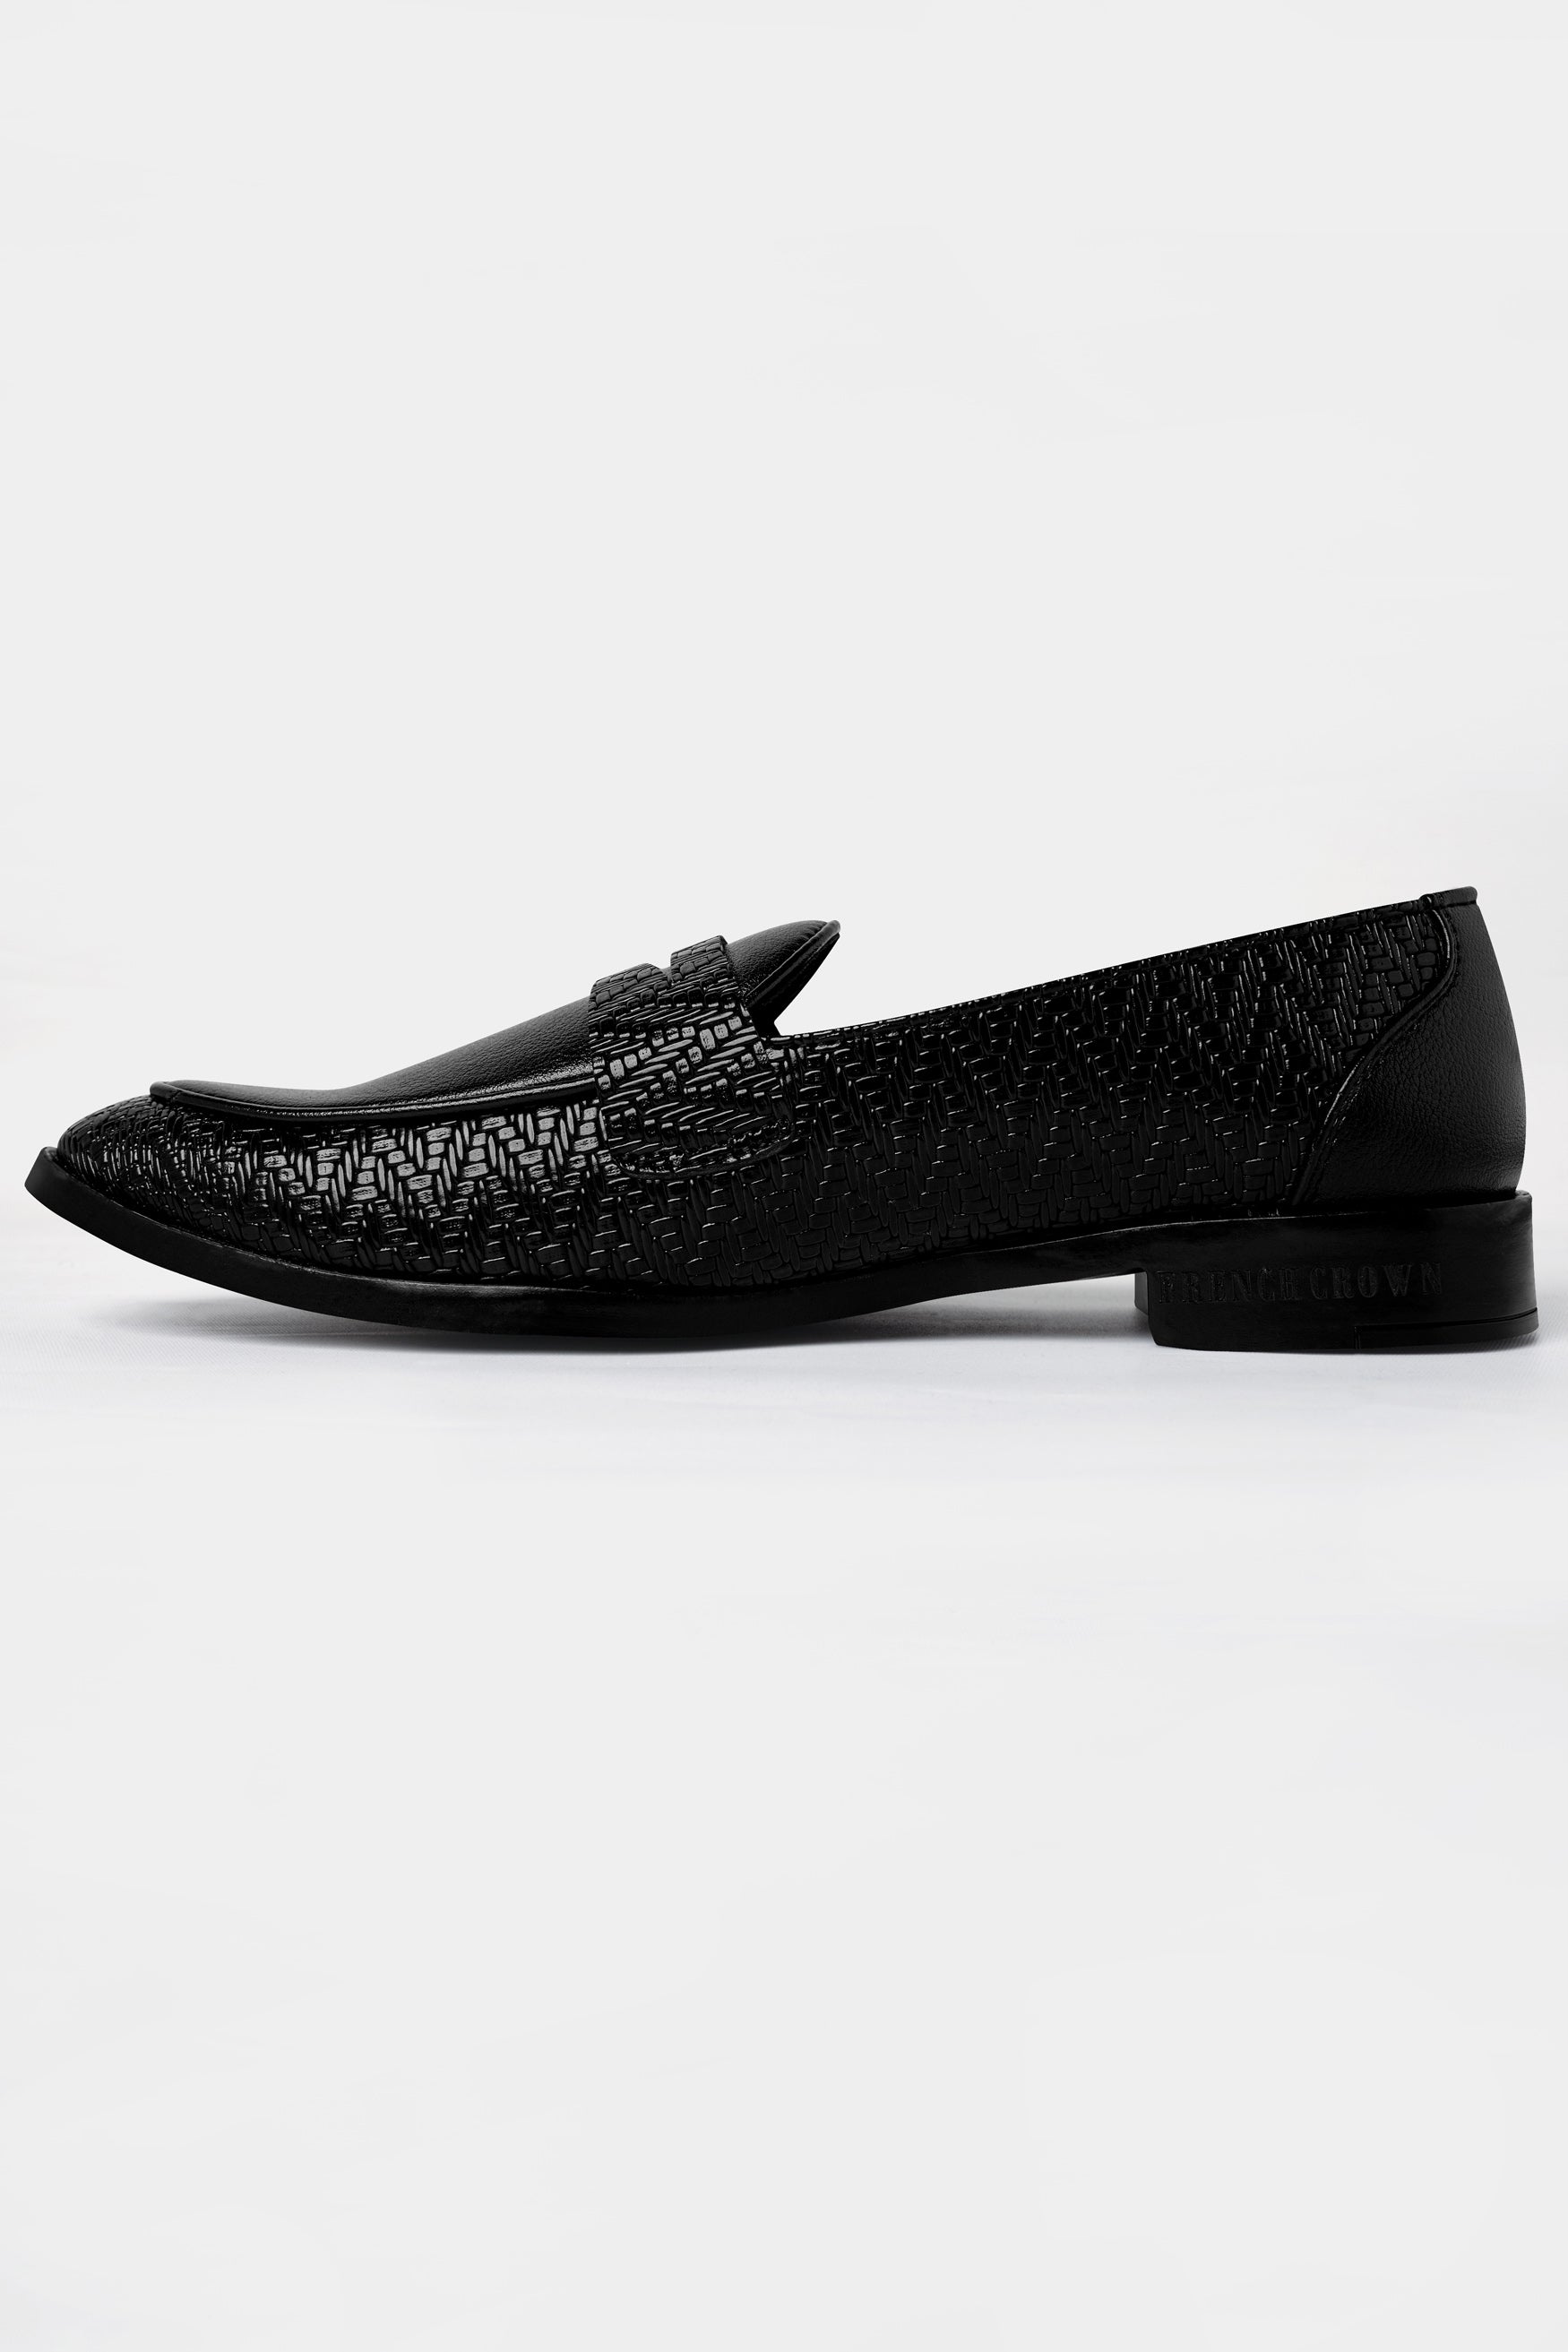 Jade Black Vegan Leather Textured Loafers